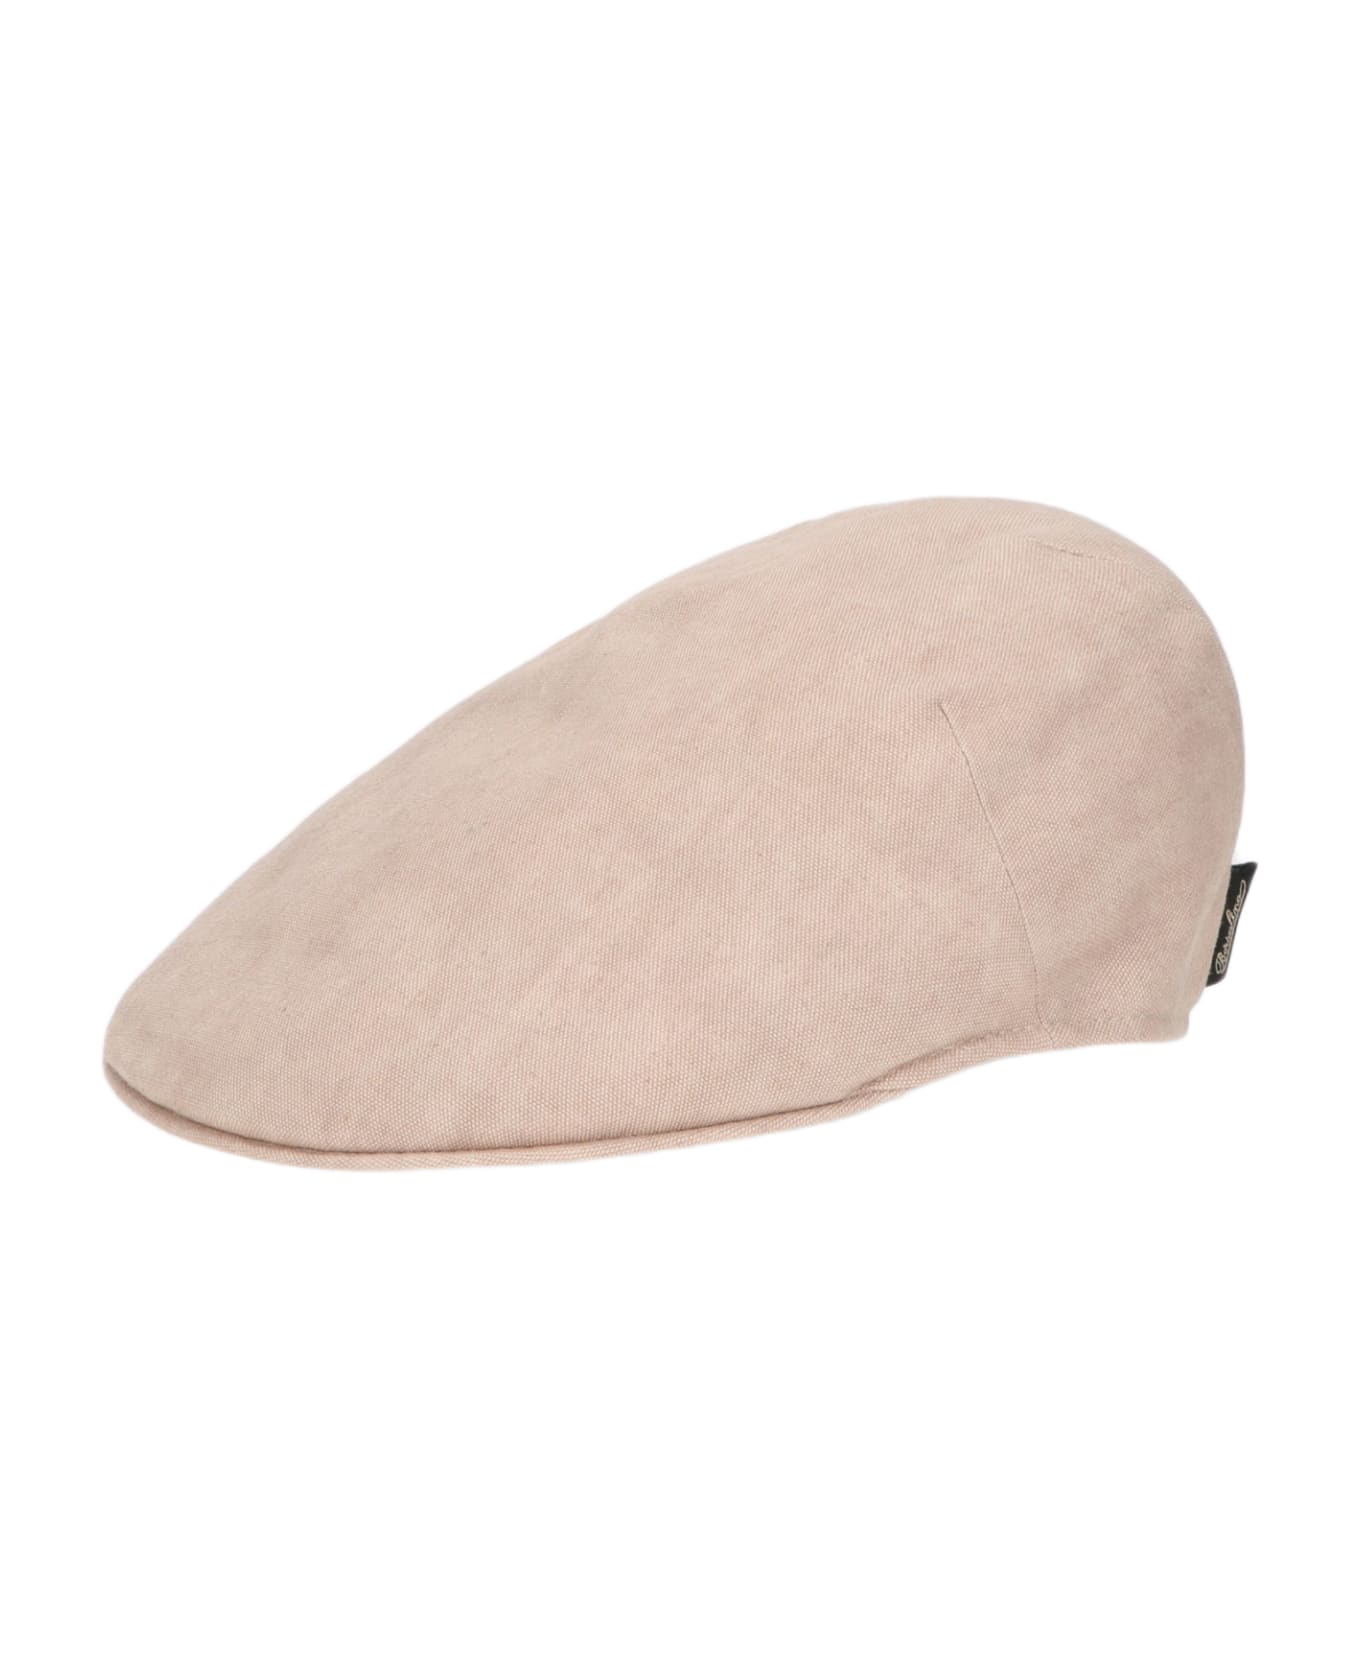 Borsalino Parigi Duckbill Flat Cap - BEIGE 帽子